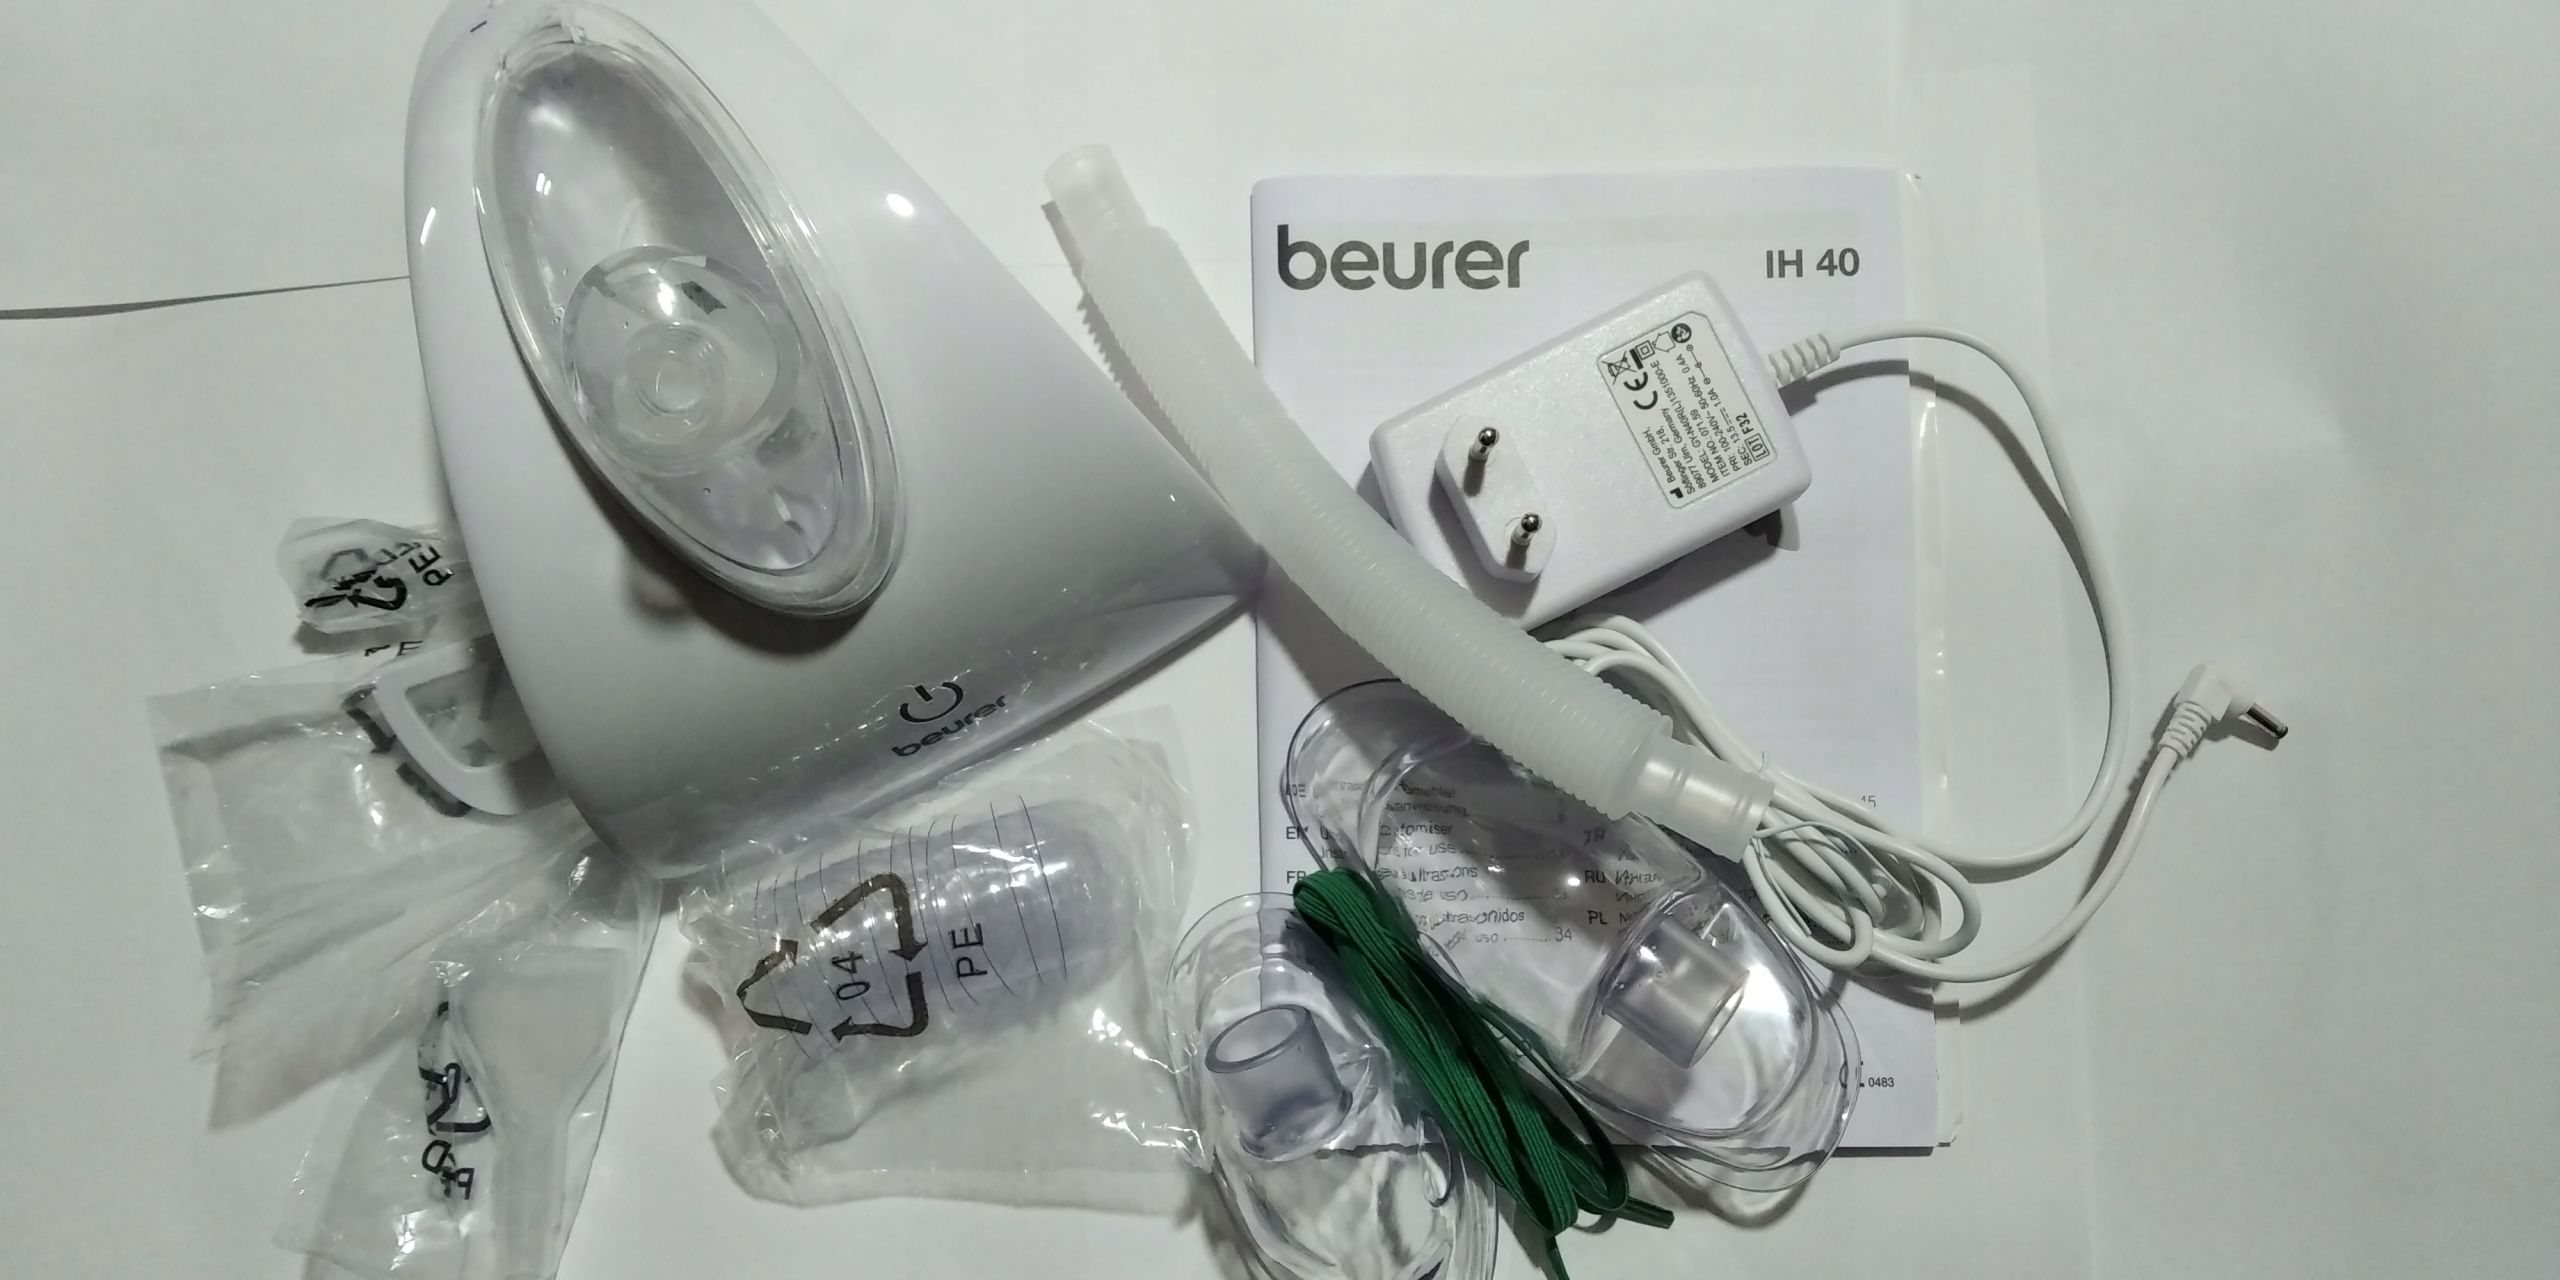 Inhalator Ultradźwiękowy Beurer Ih 40